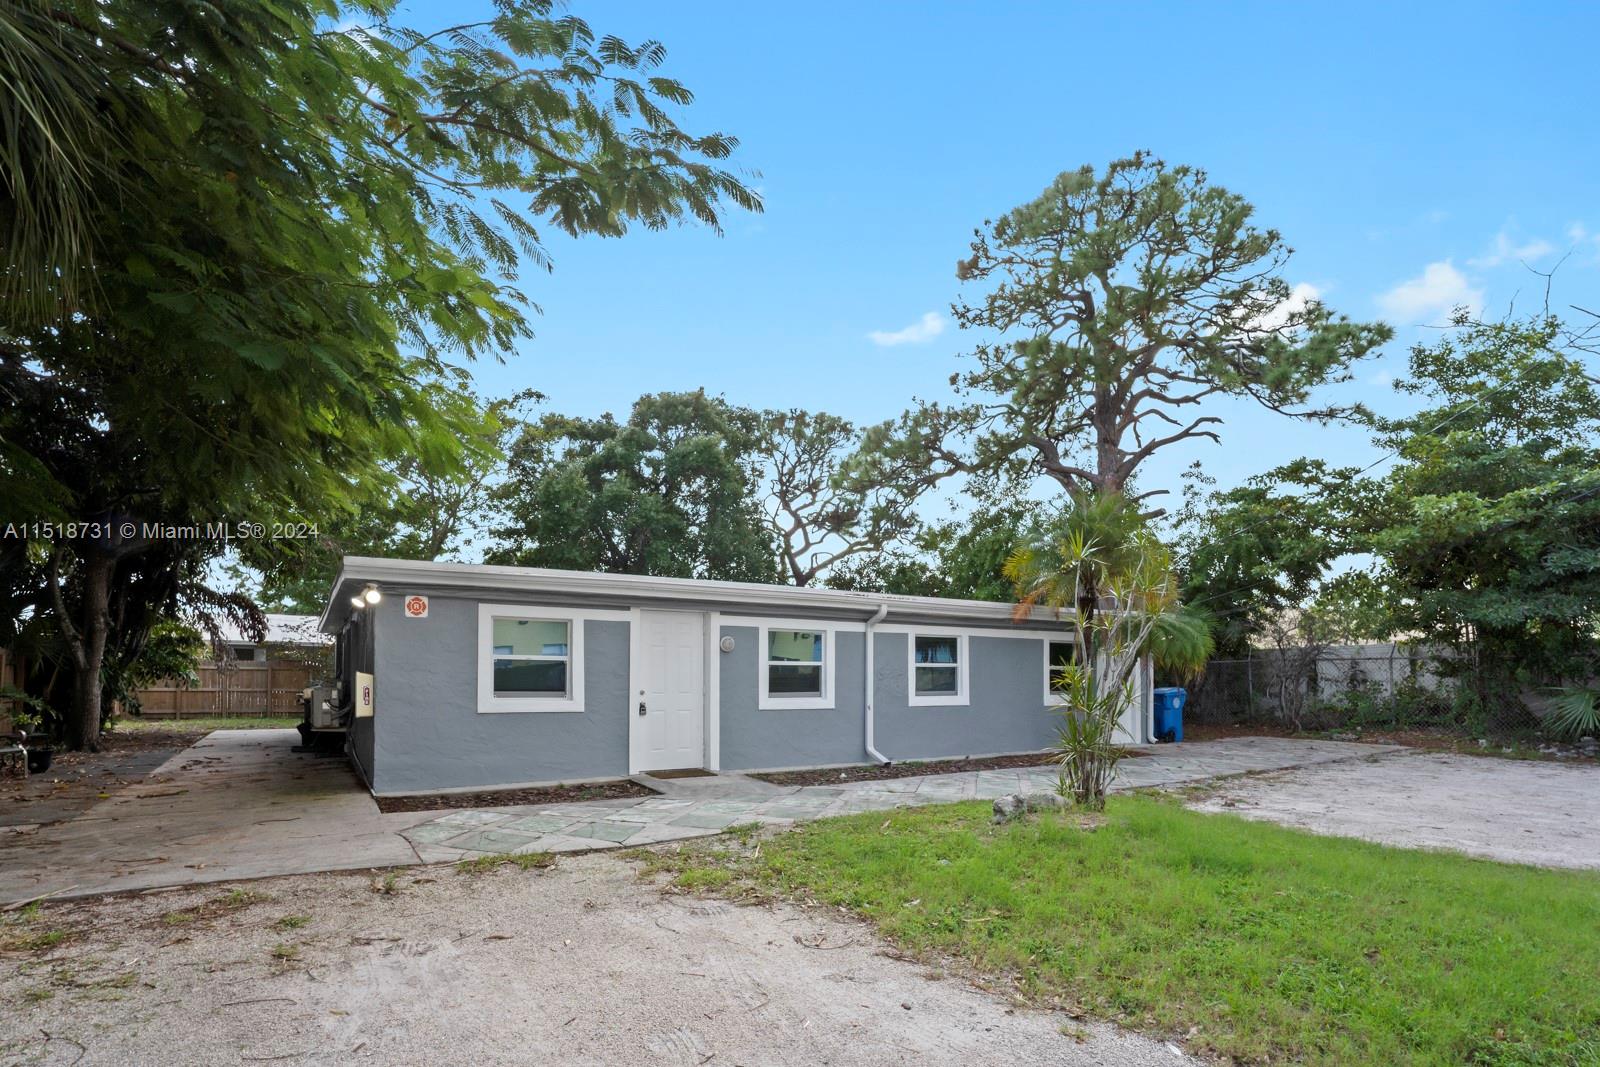 Rental Property at 1279 Ne 40th Pl, Oakland Park, Miami-Dade County, Florida -  - $689,000 MO.